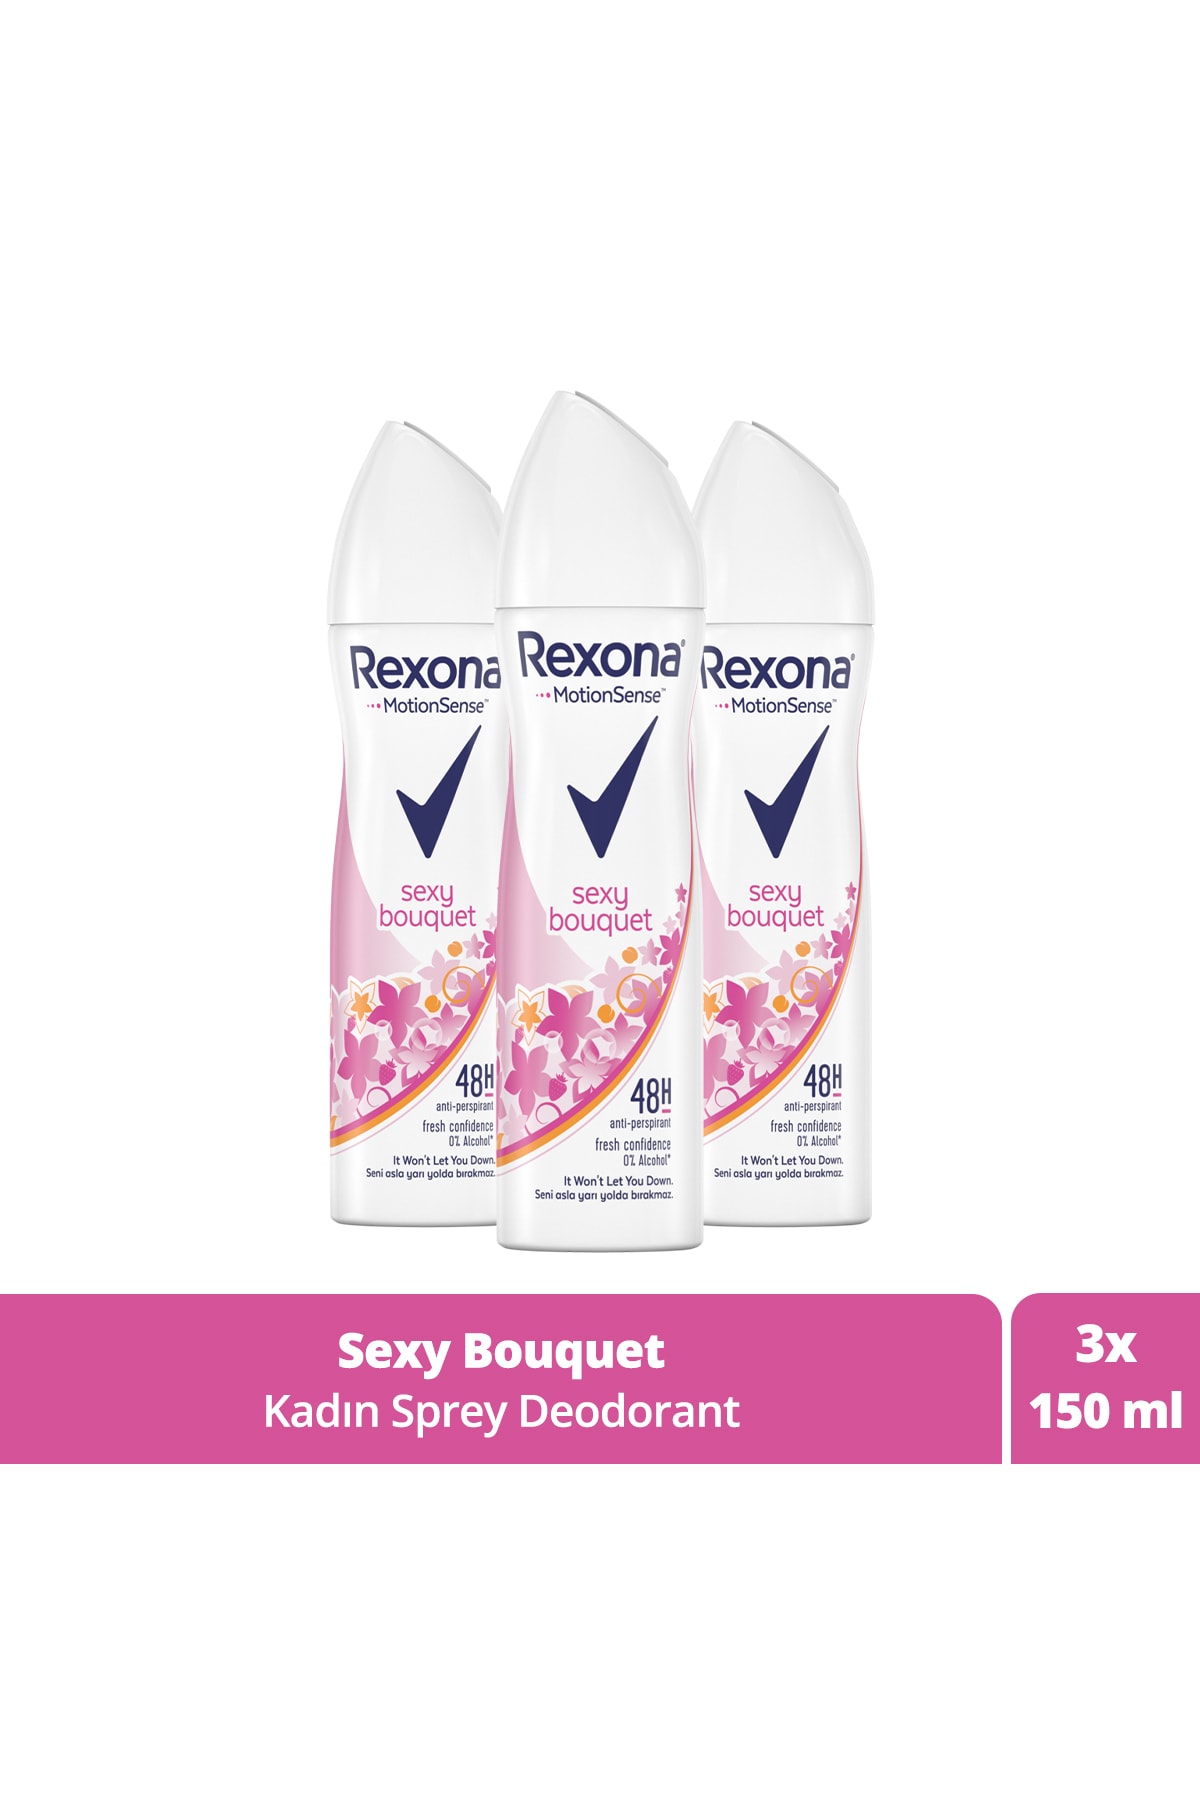 Rexona Kadın Sprey Deodorant Sexy Bouquet Ter Kokusuna Karşı Koruma 150 Ml X3 Adet